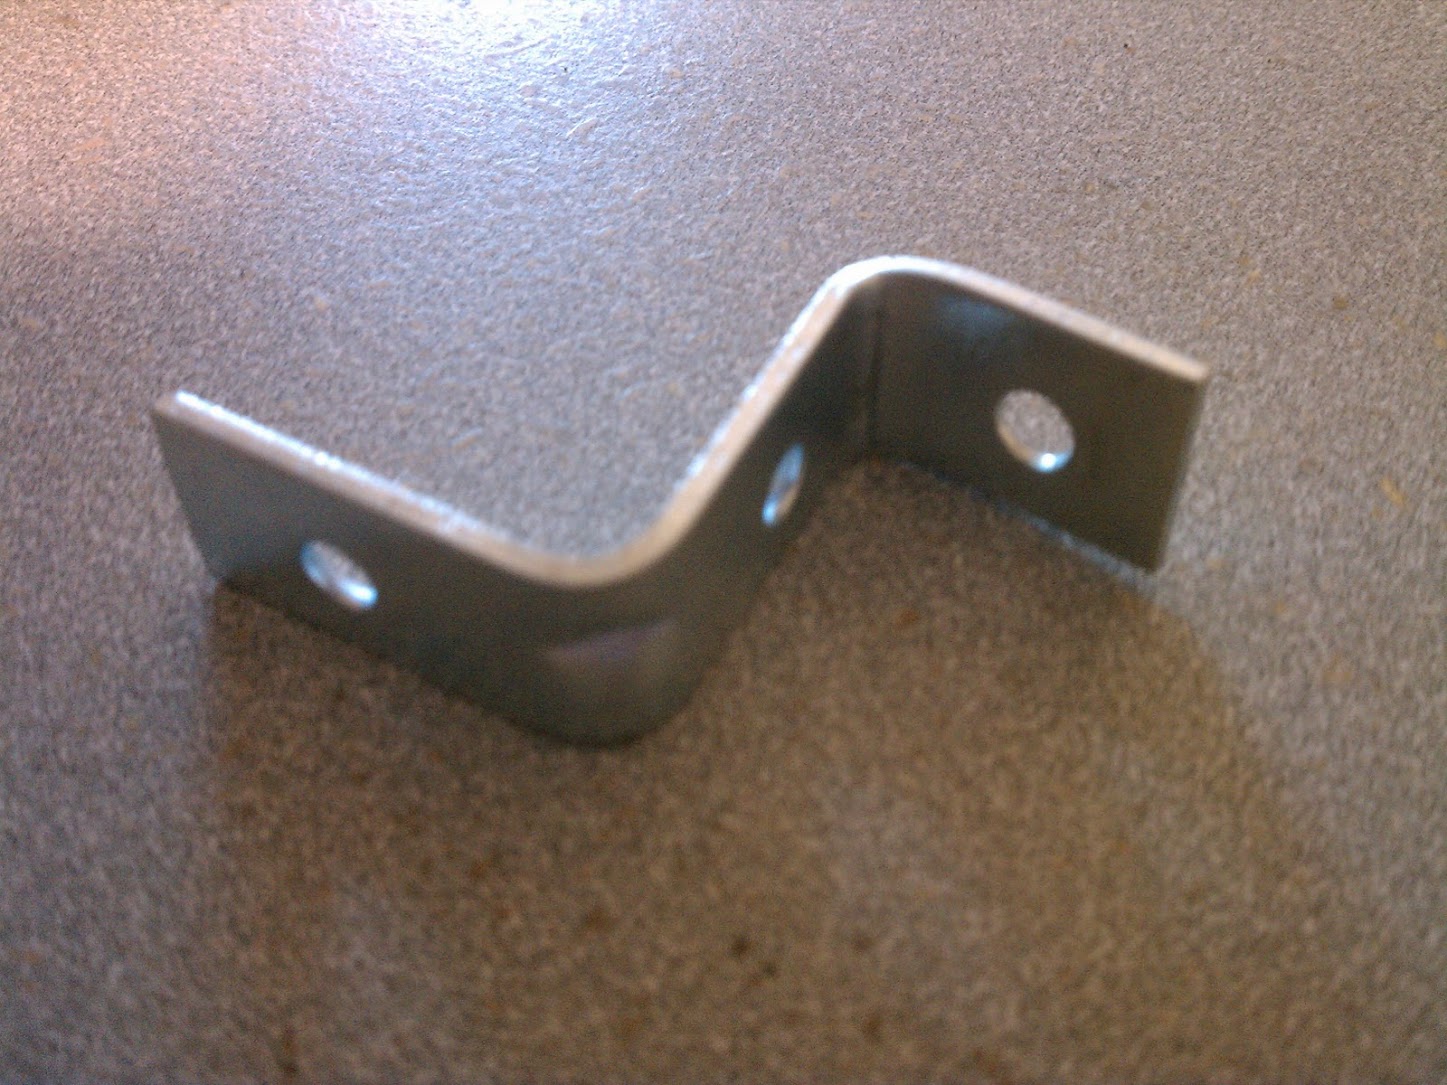 a metal bracket